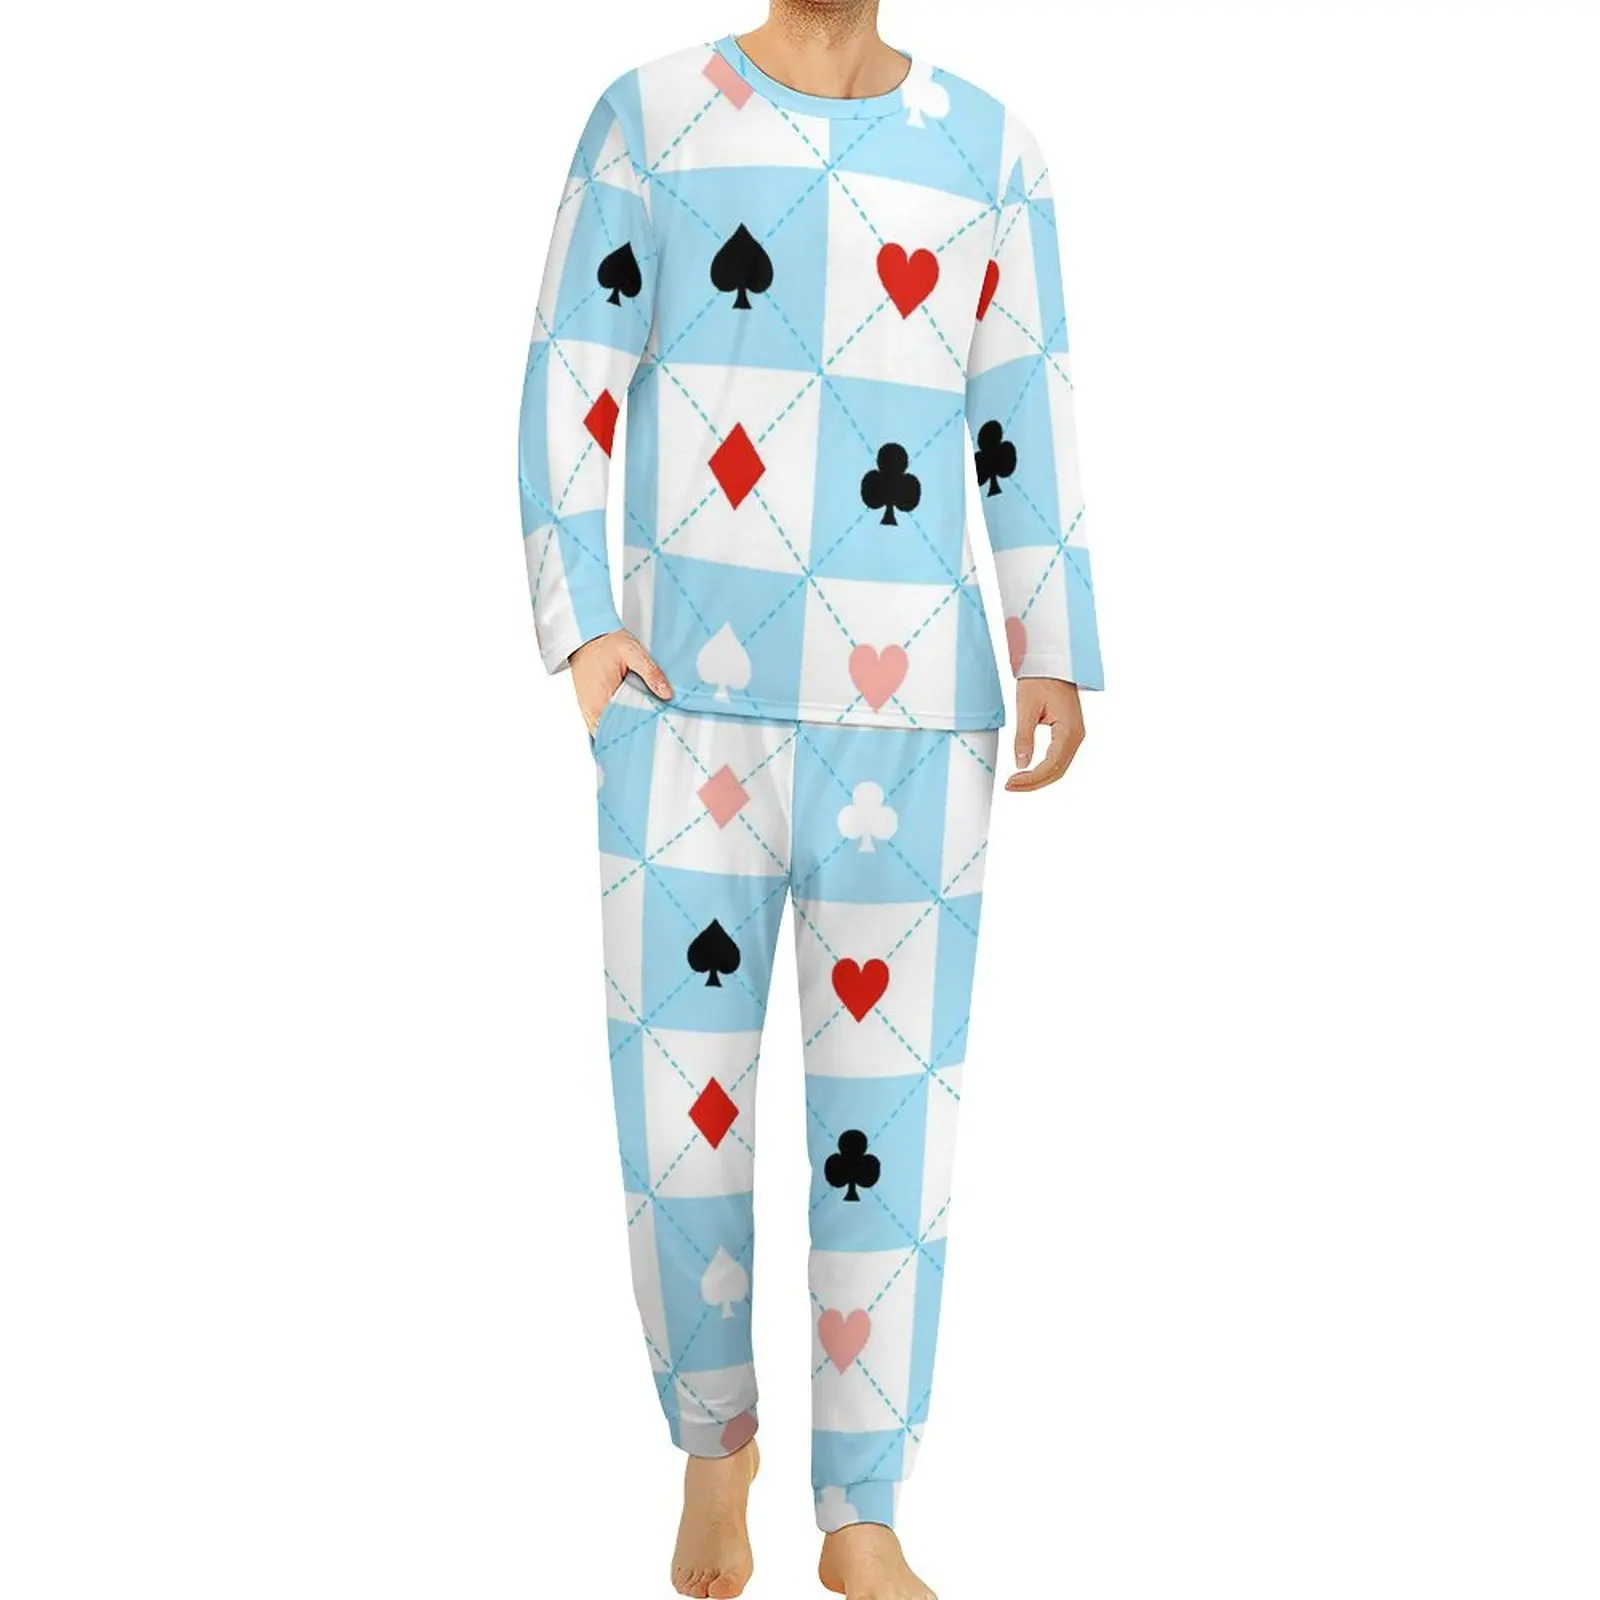 cuore-poker-pigiama-quotidiano-due-pezzi-blu-e-bianco-plaid-adorabile-pigiama-set-uomo-manica-lunga-casa-grafica-pigiameria-di-grandi-dimensioni